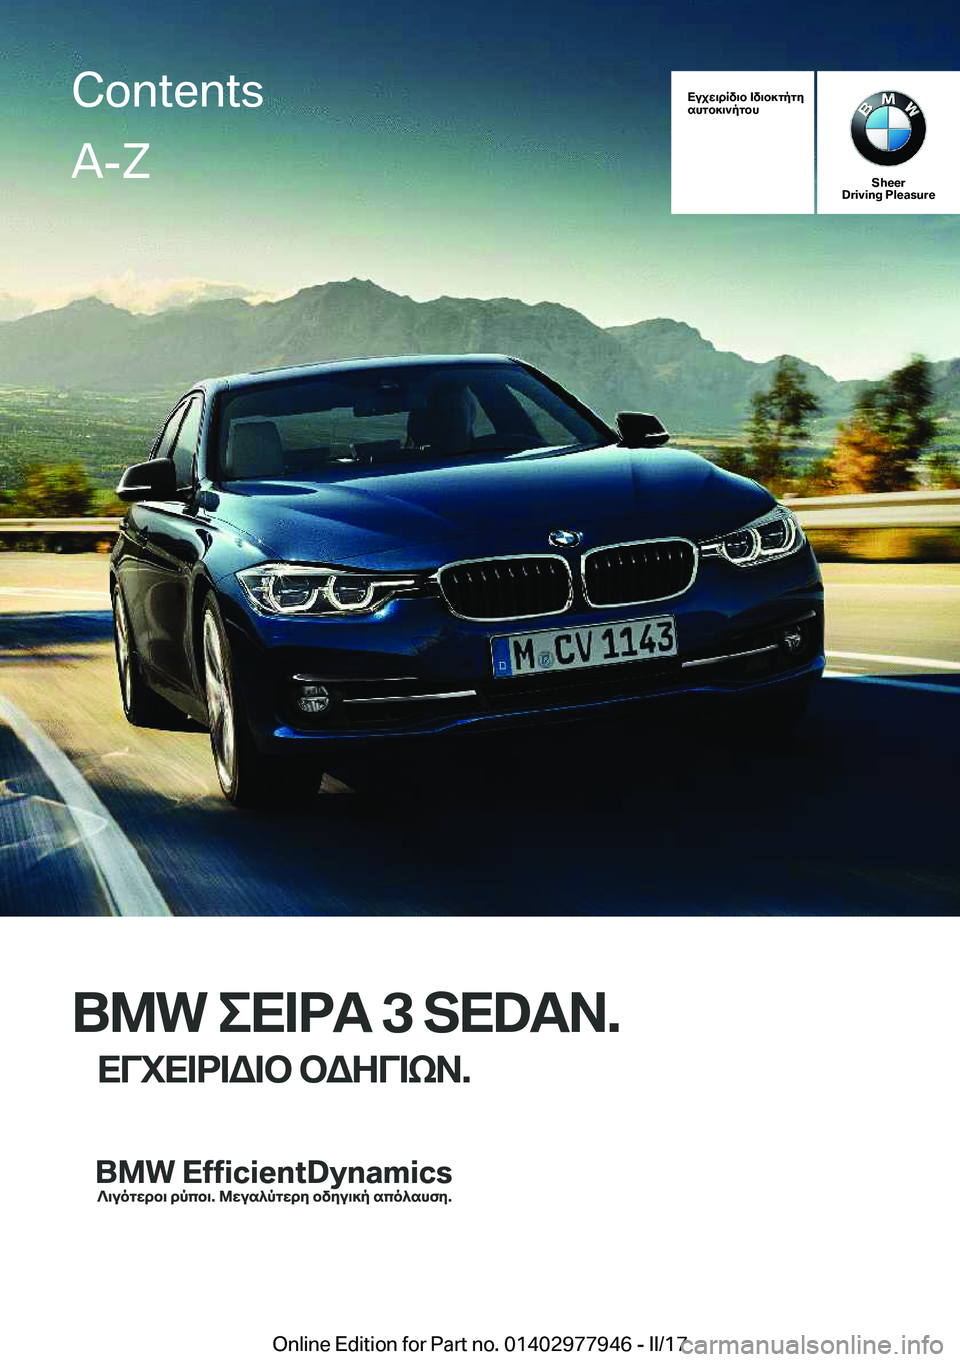 BMW 3 SERIES 2017  ΟΔΗΓΌΣ ΧΡΉΣΗΣ (in Greek) Xujw\dRv\b�=v\b]gpgy
shgb]\`pgbh
�S�h�e�e�r
�D�r�i�v�i�n�g��P�l�e�a�s�u�r�e
�B�M�W�eX=dT��3��S�E�D�A�N�.
XViX=d=W=b�bW;V=kA�.
�C�o�n�t�e�n�t�s